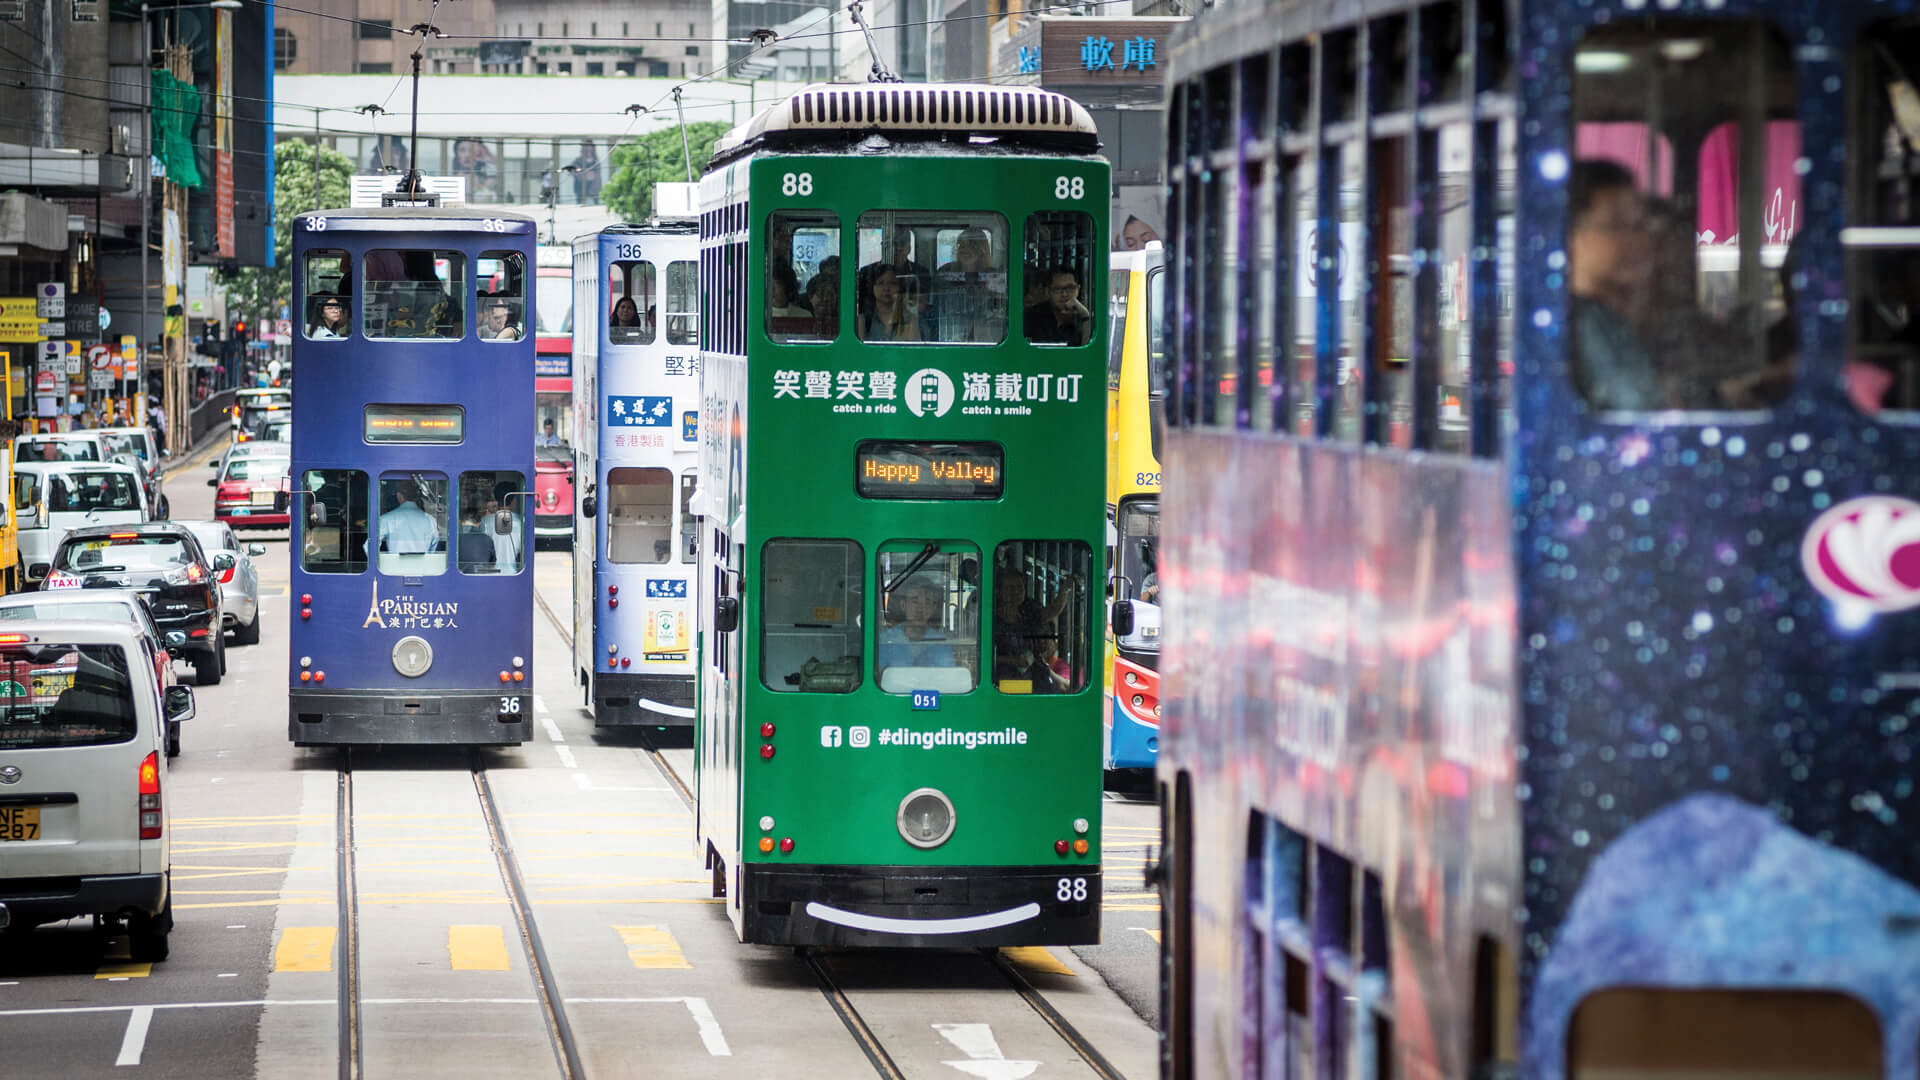 HK Tramways – Brand revitalisation